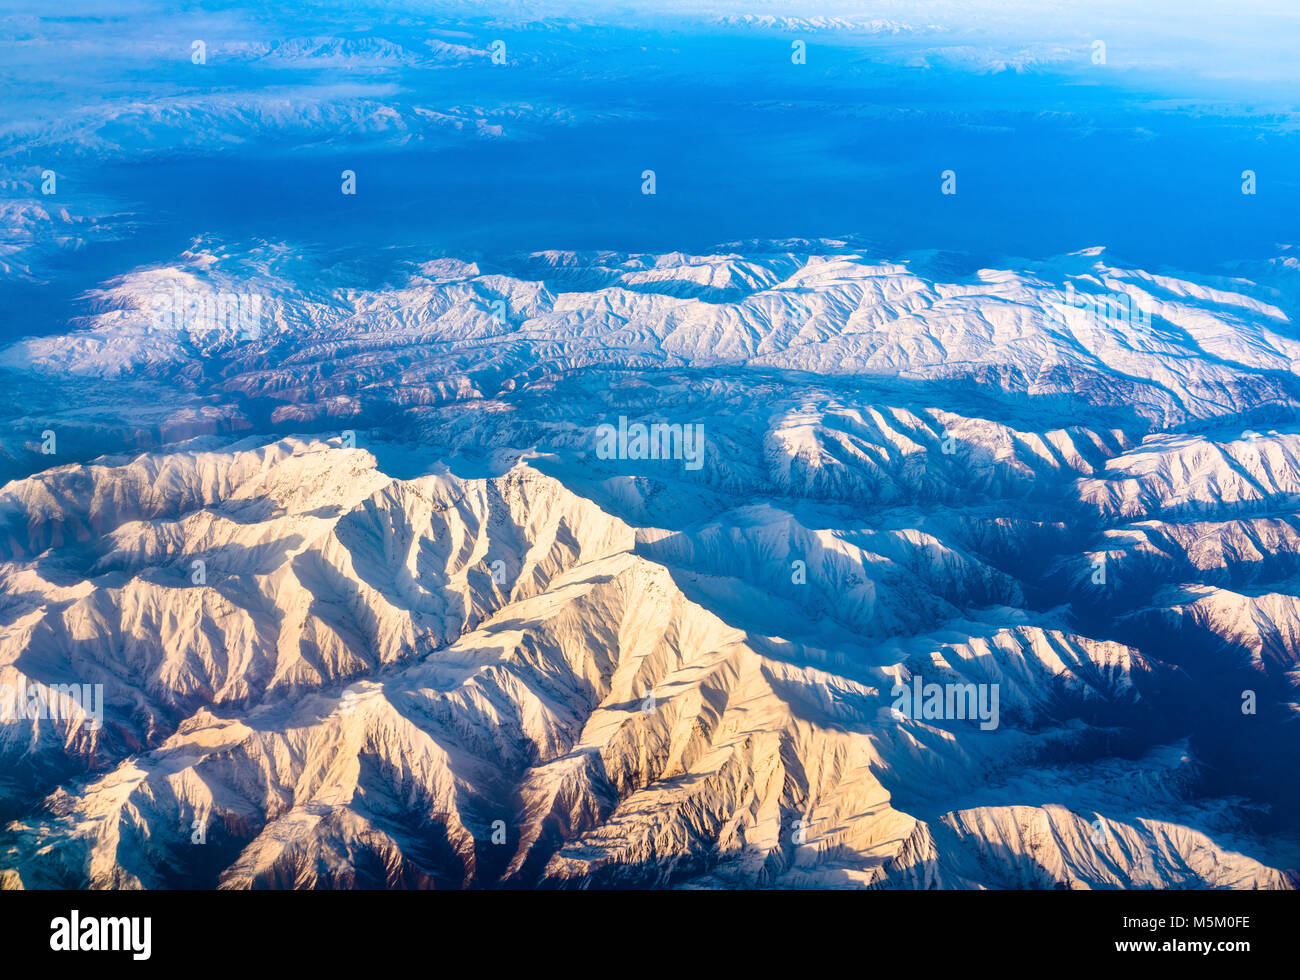 Aerial view of mountains in Northern Anatolia, Turkey Stock Photo